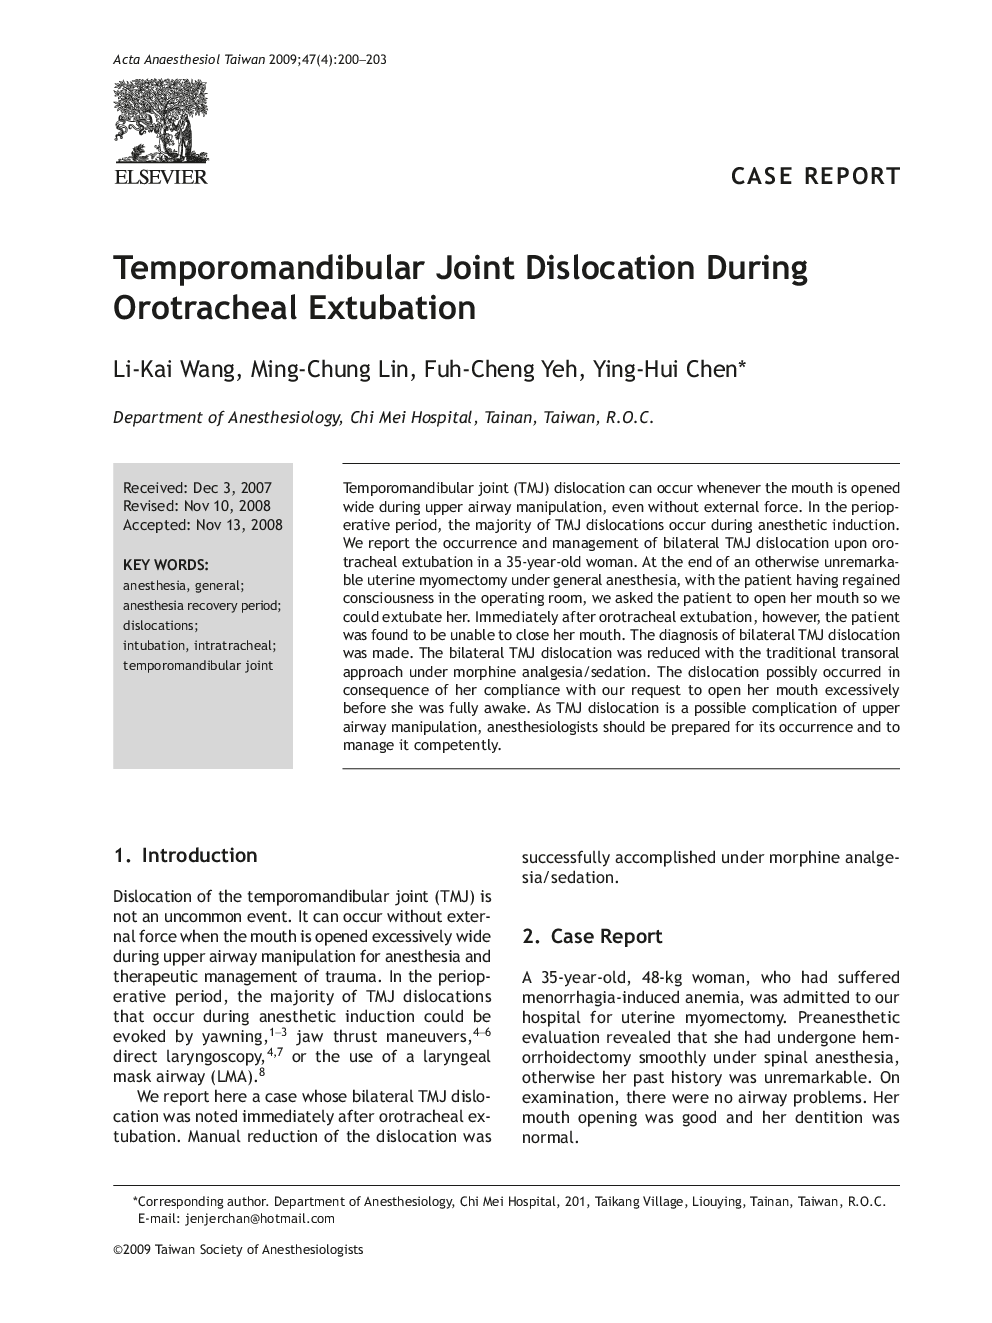 Temporomandibular Joint Dislocation During Orotracheal Extubation